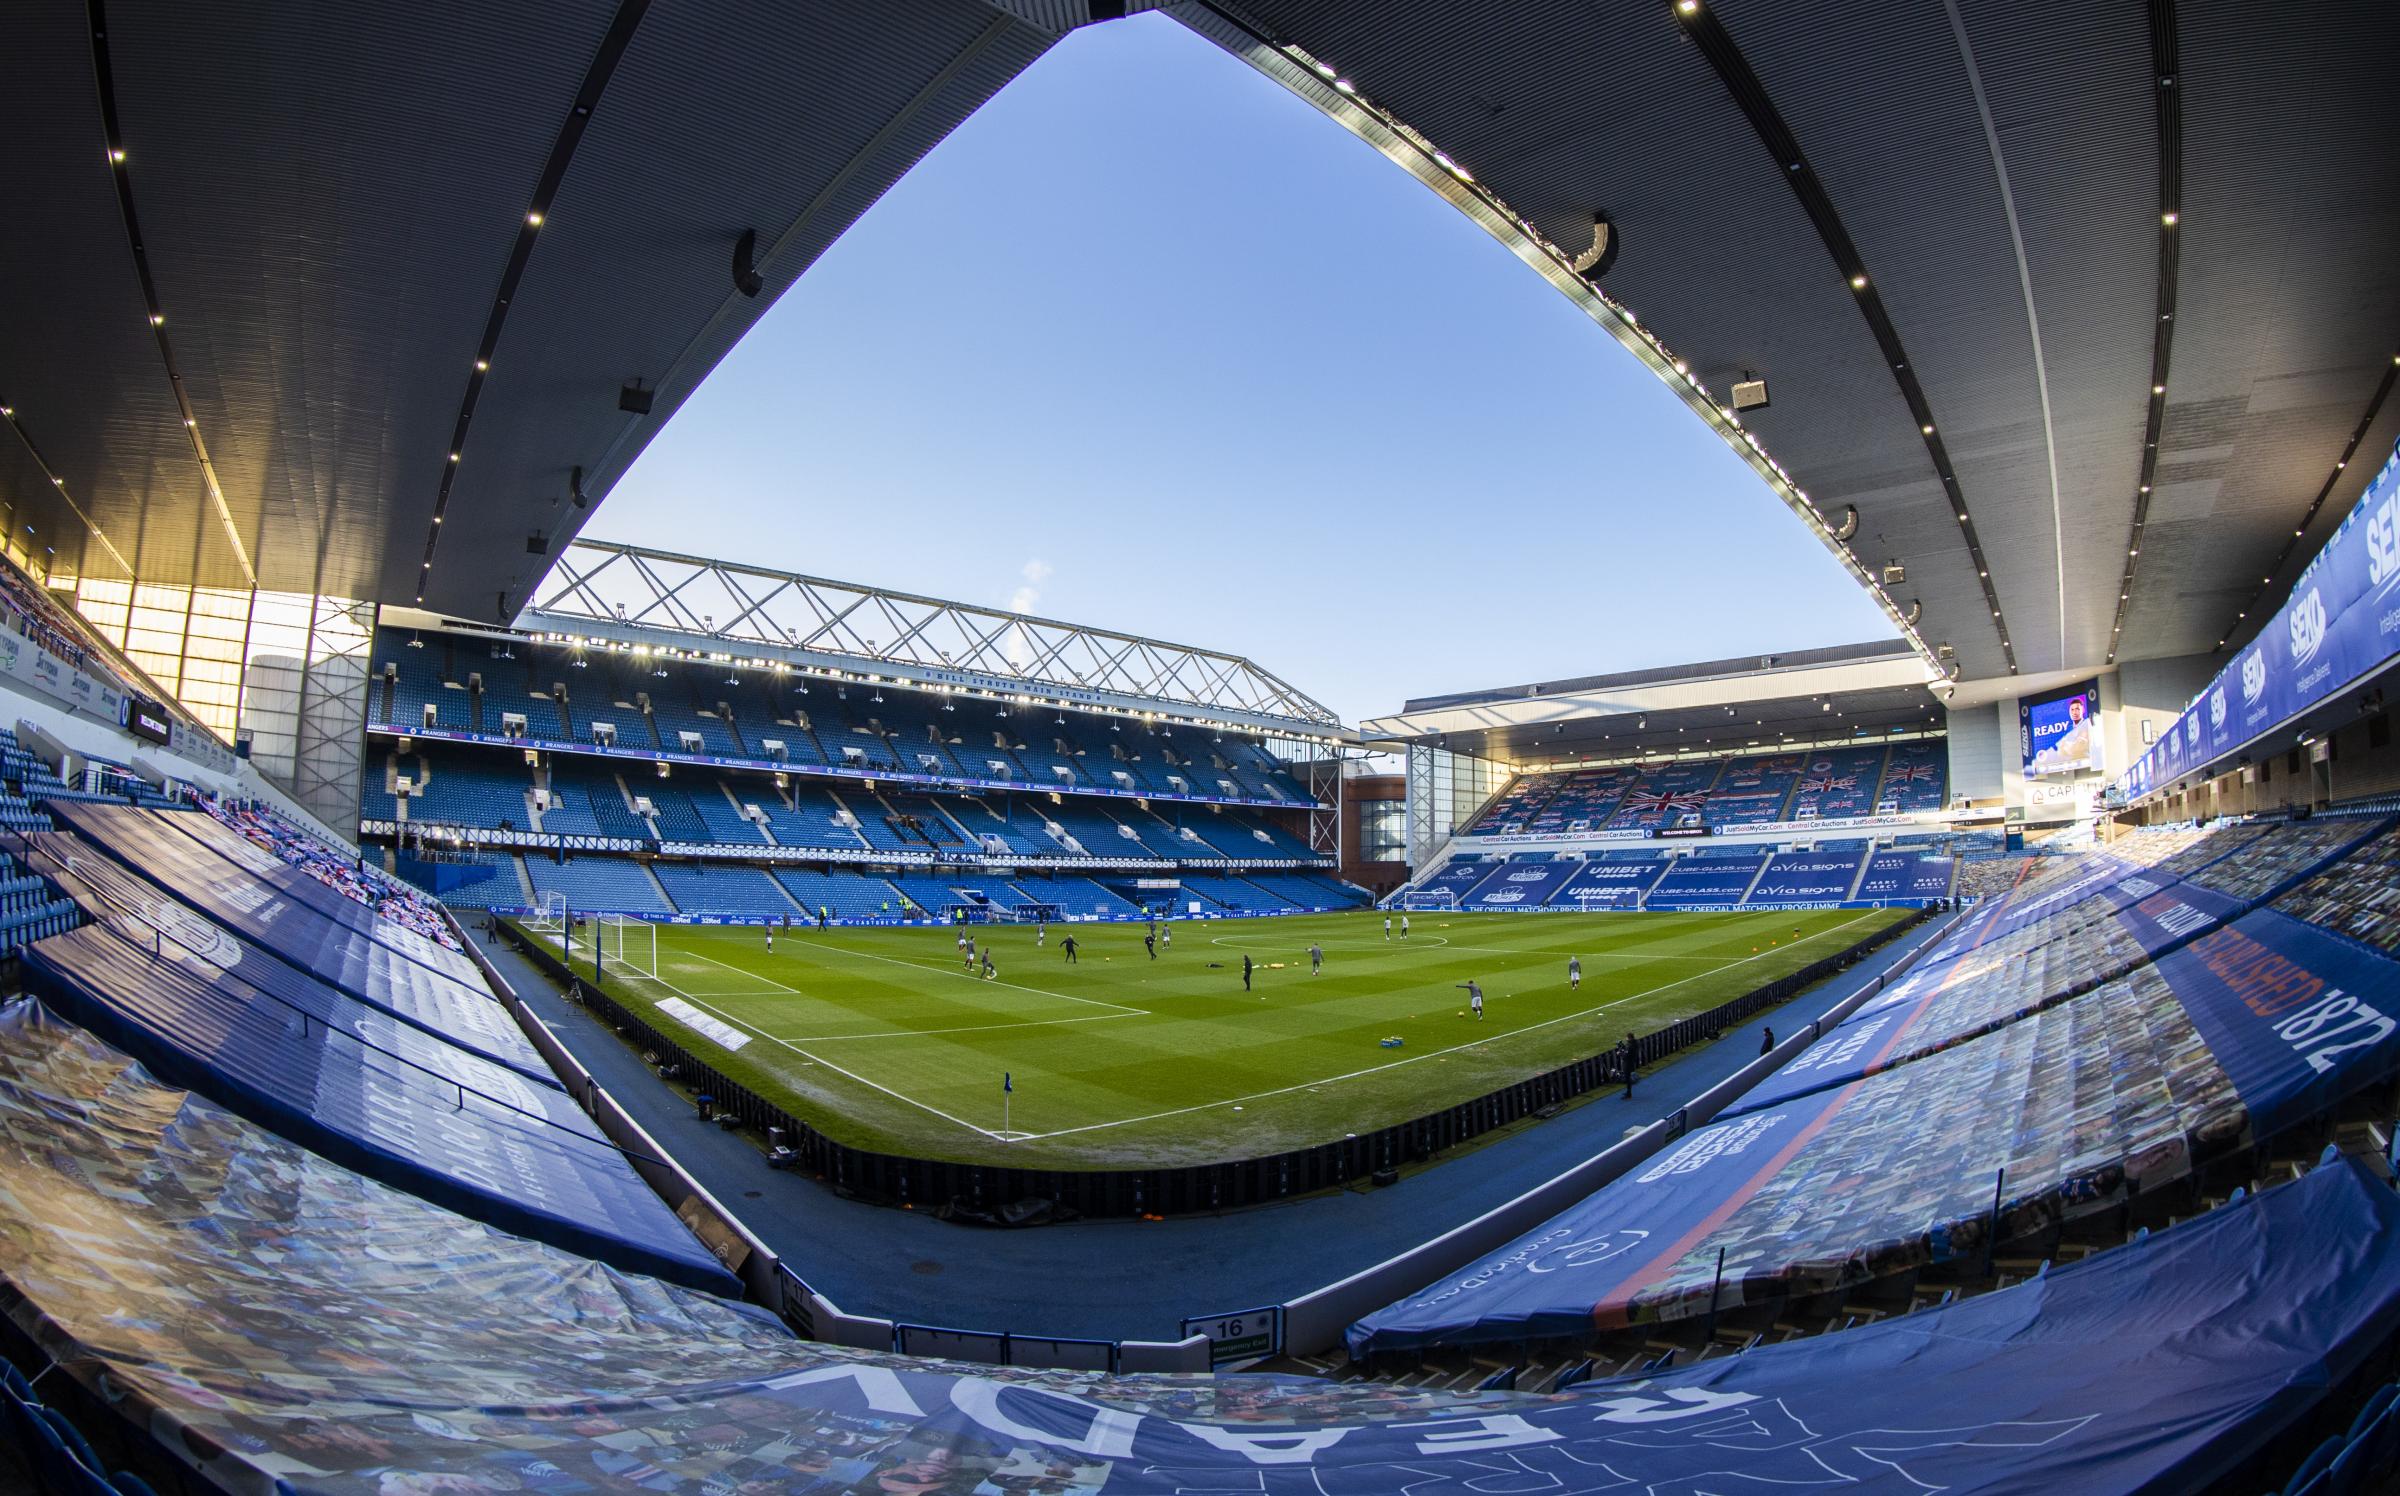 Black Rooster Peri Peri announce new location at Rangers' Ibrox stadium in Glasgow